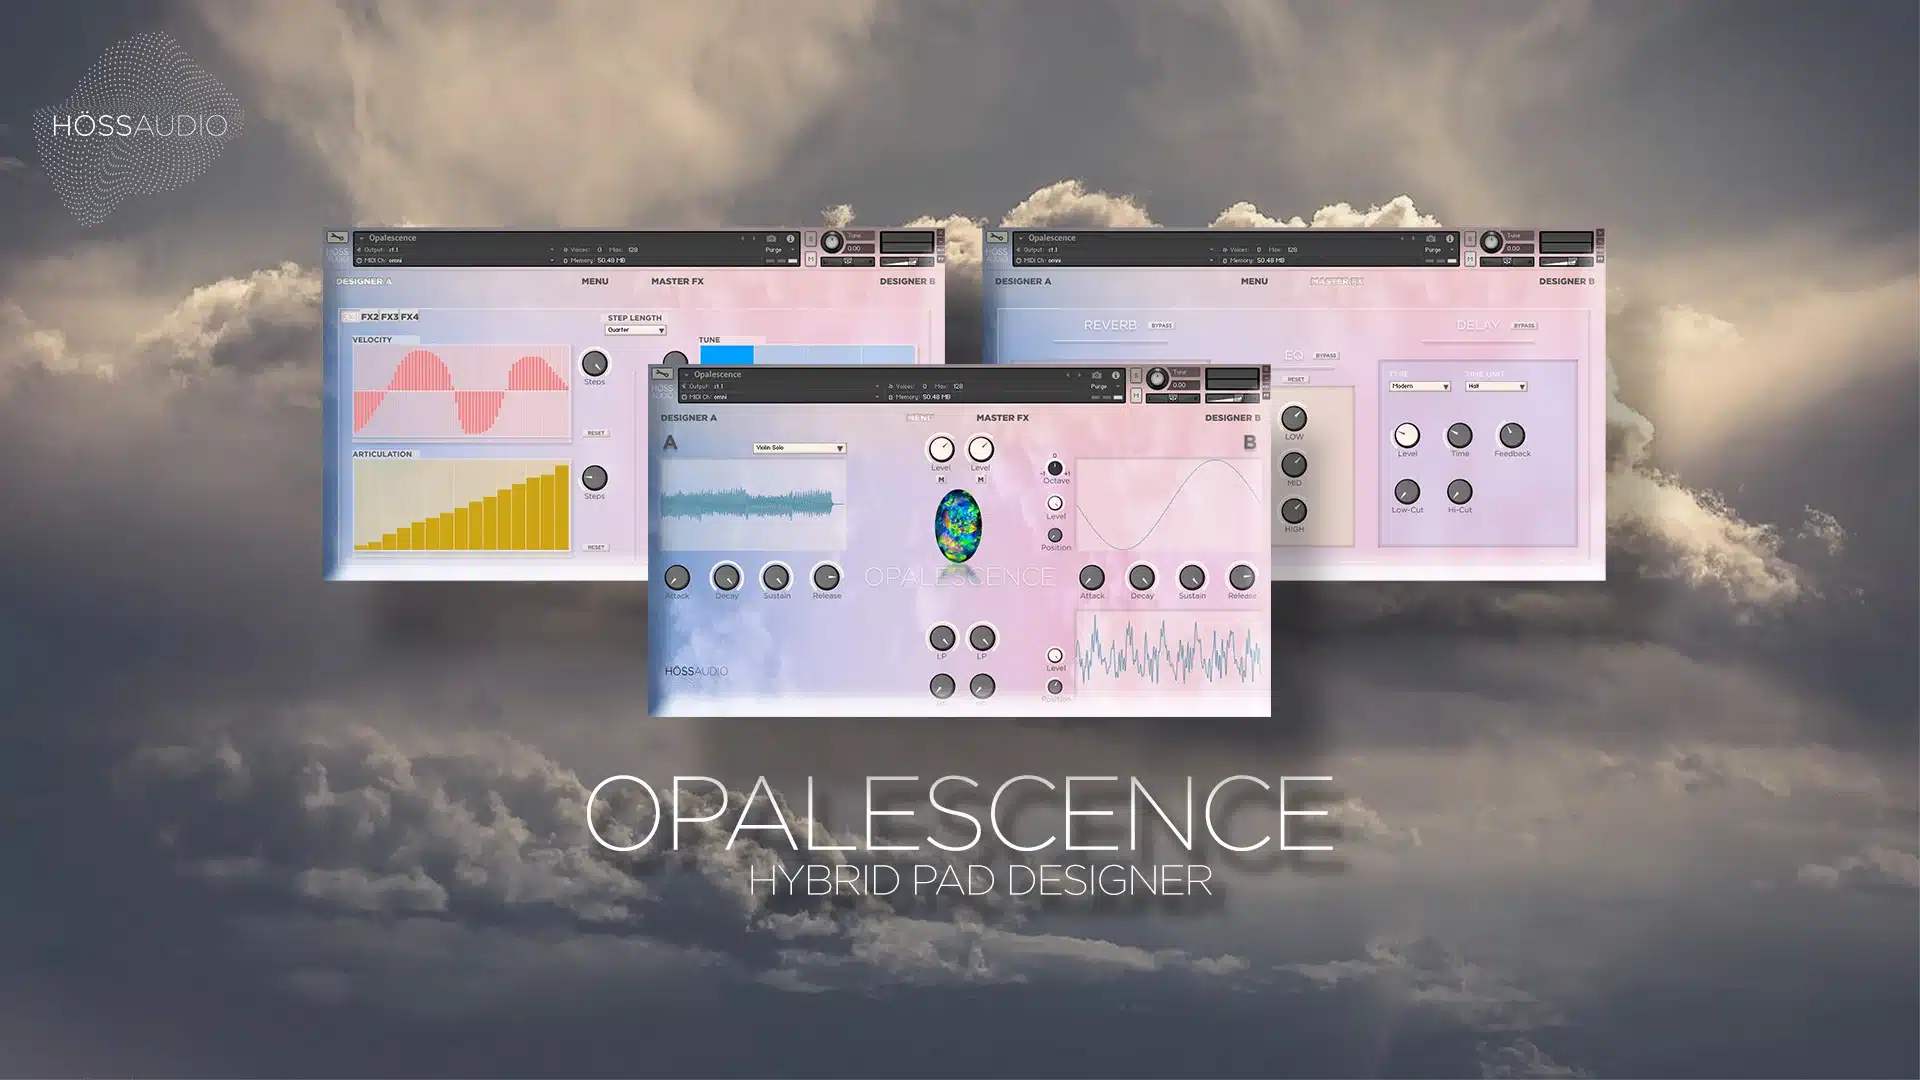 75% off “Opalescence” by Hoss Audio